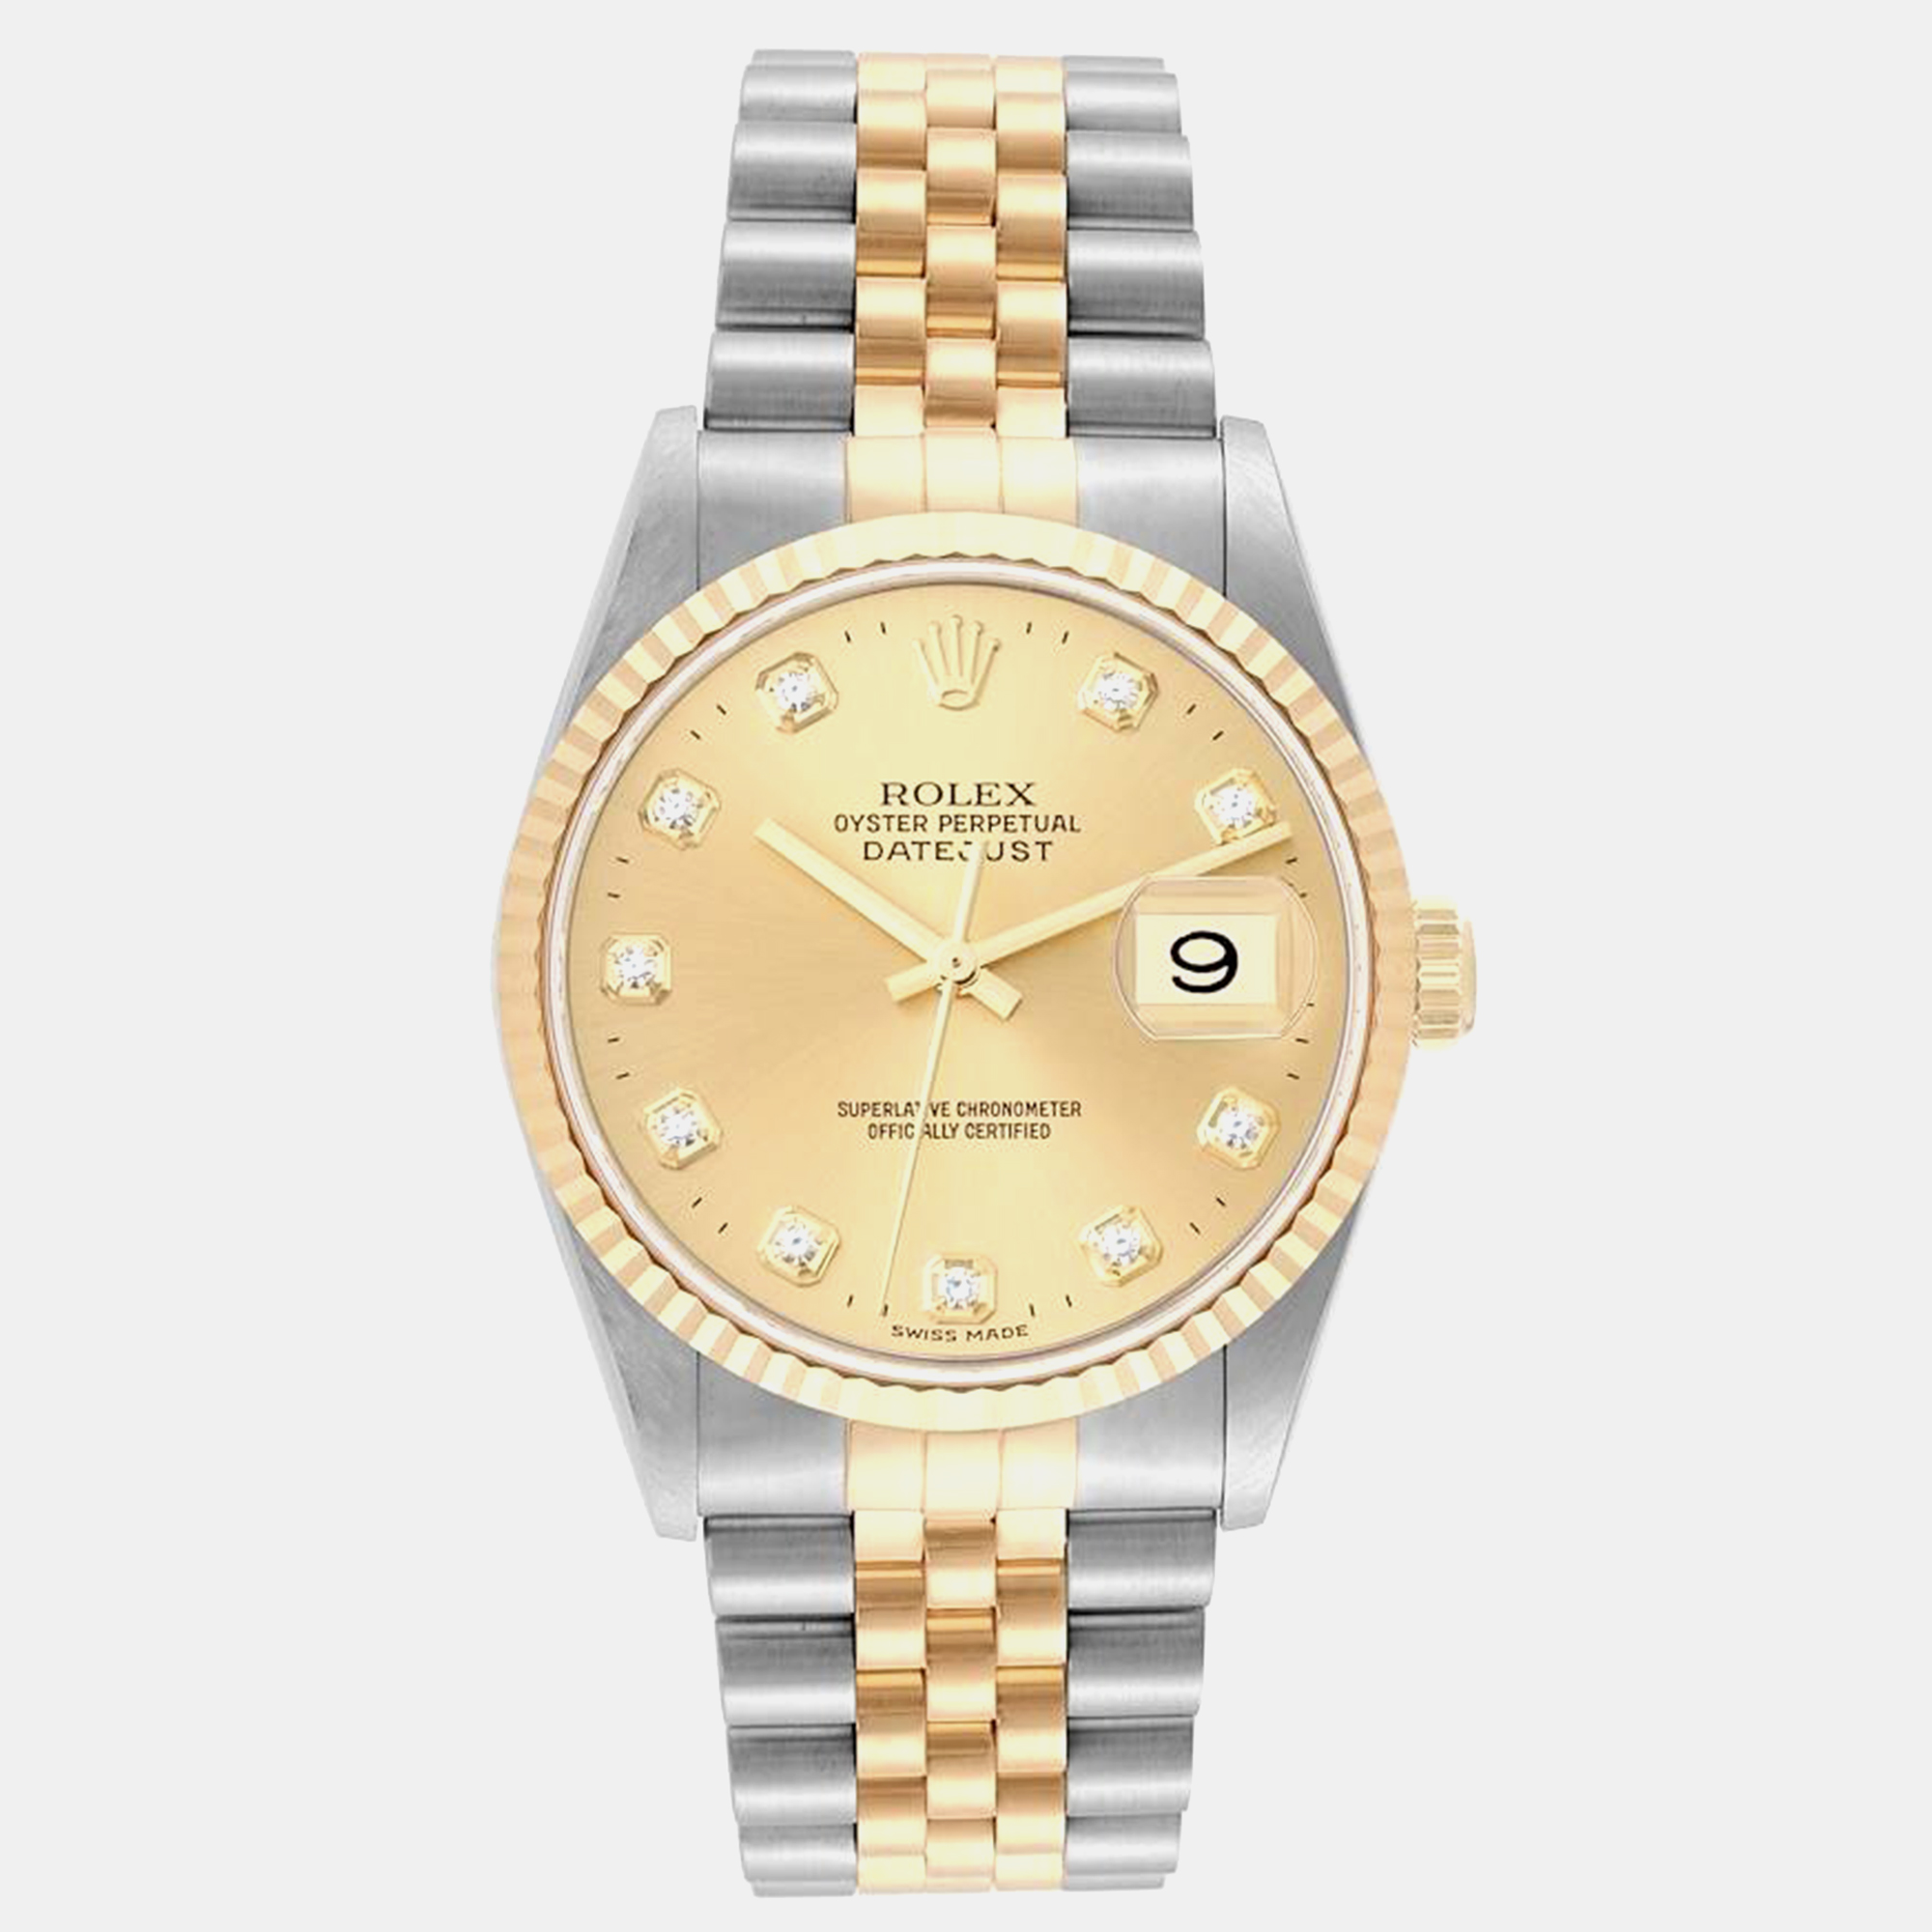 Rolex datejust diamond dial steel yellow gold men's watch 16233 36 mm